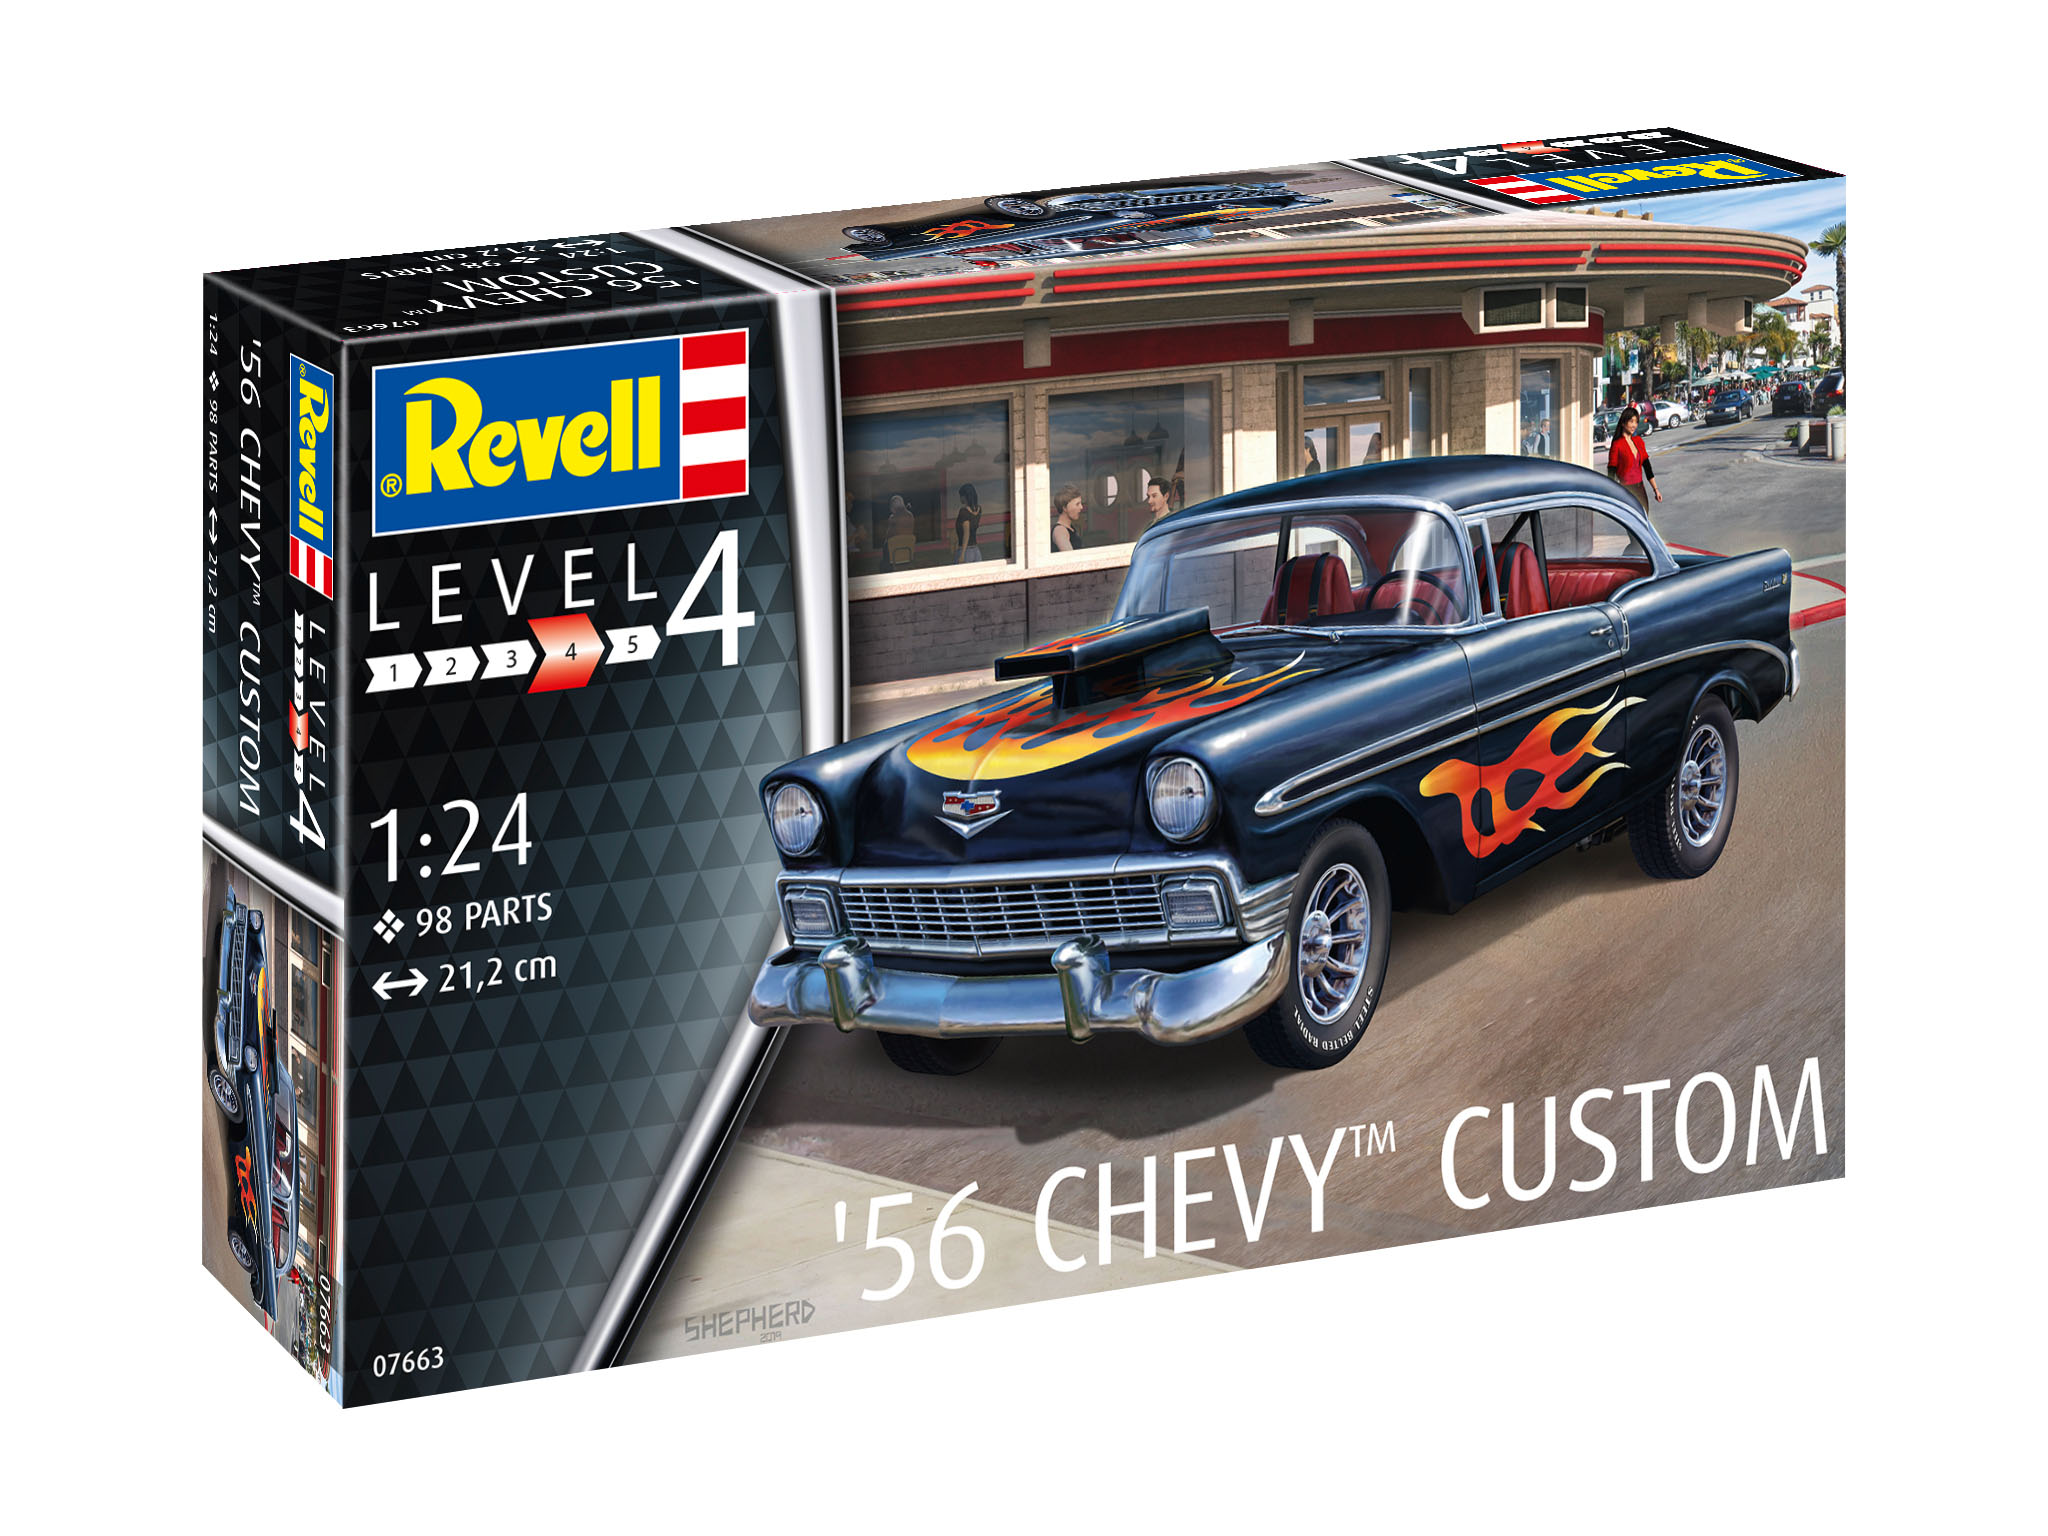 1/24 56 Chevy Customs